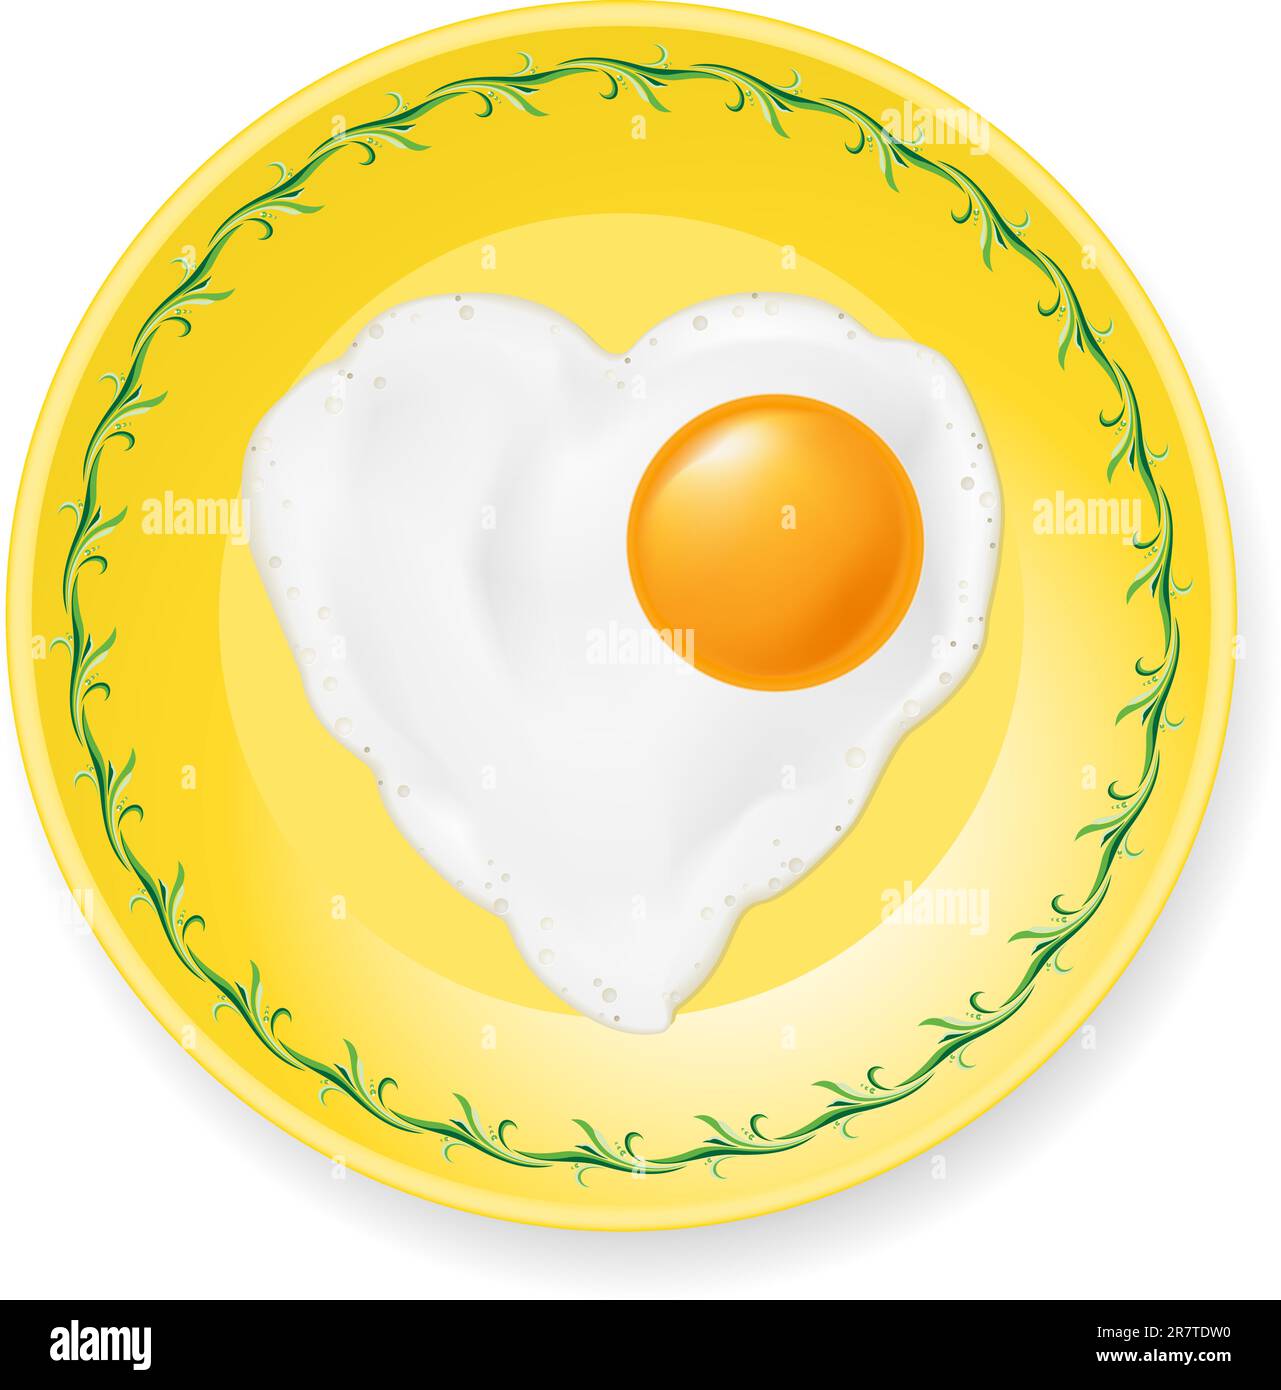 Heart-shaped fried egg on plate. Illustration on white background Stock Vector